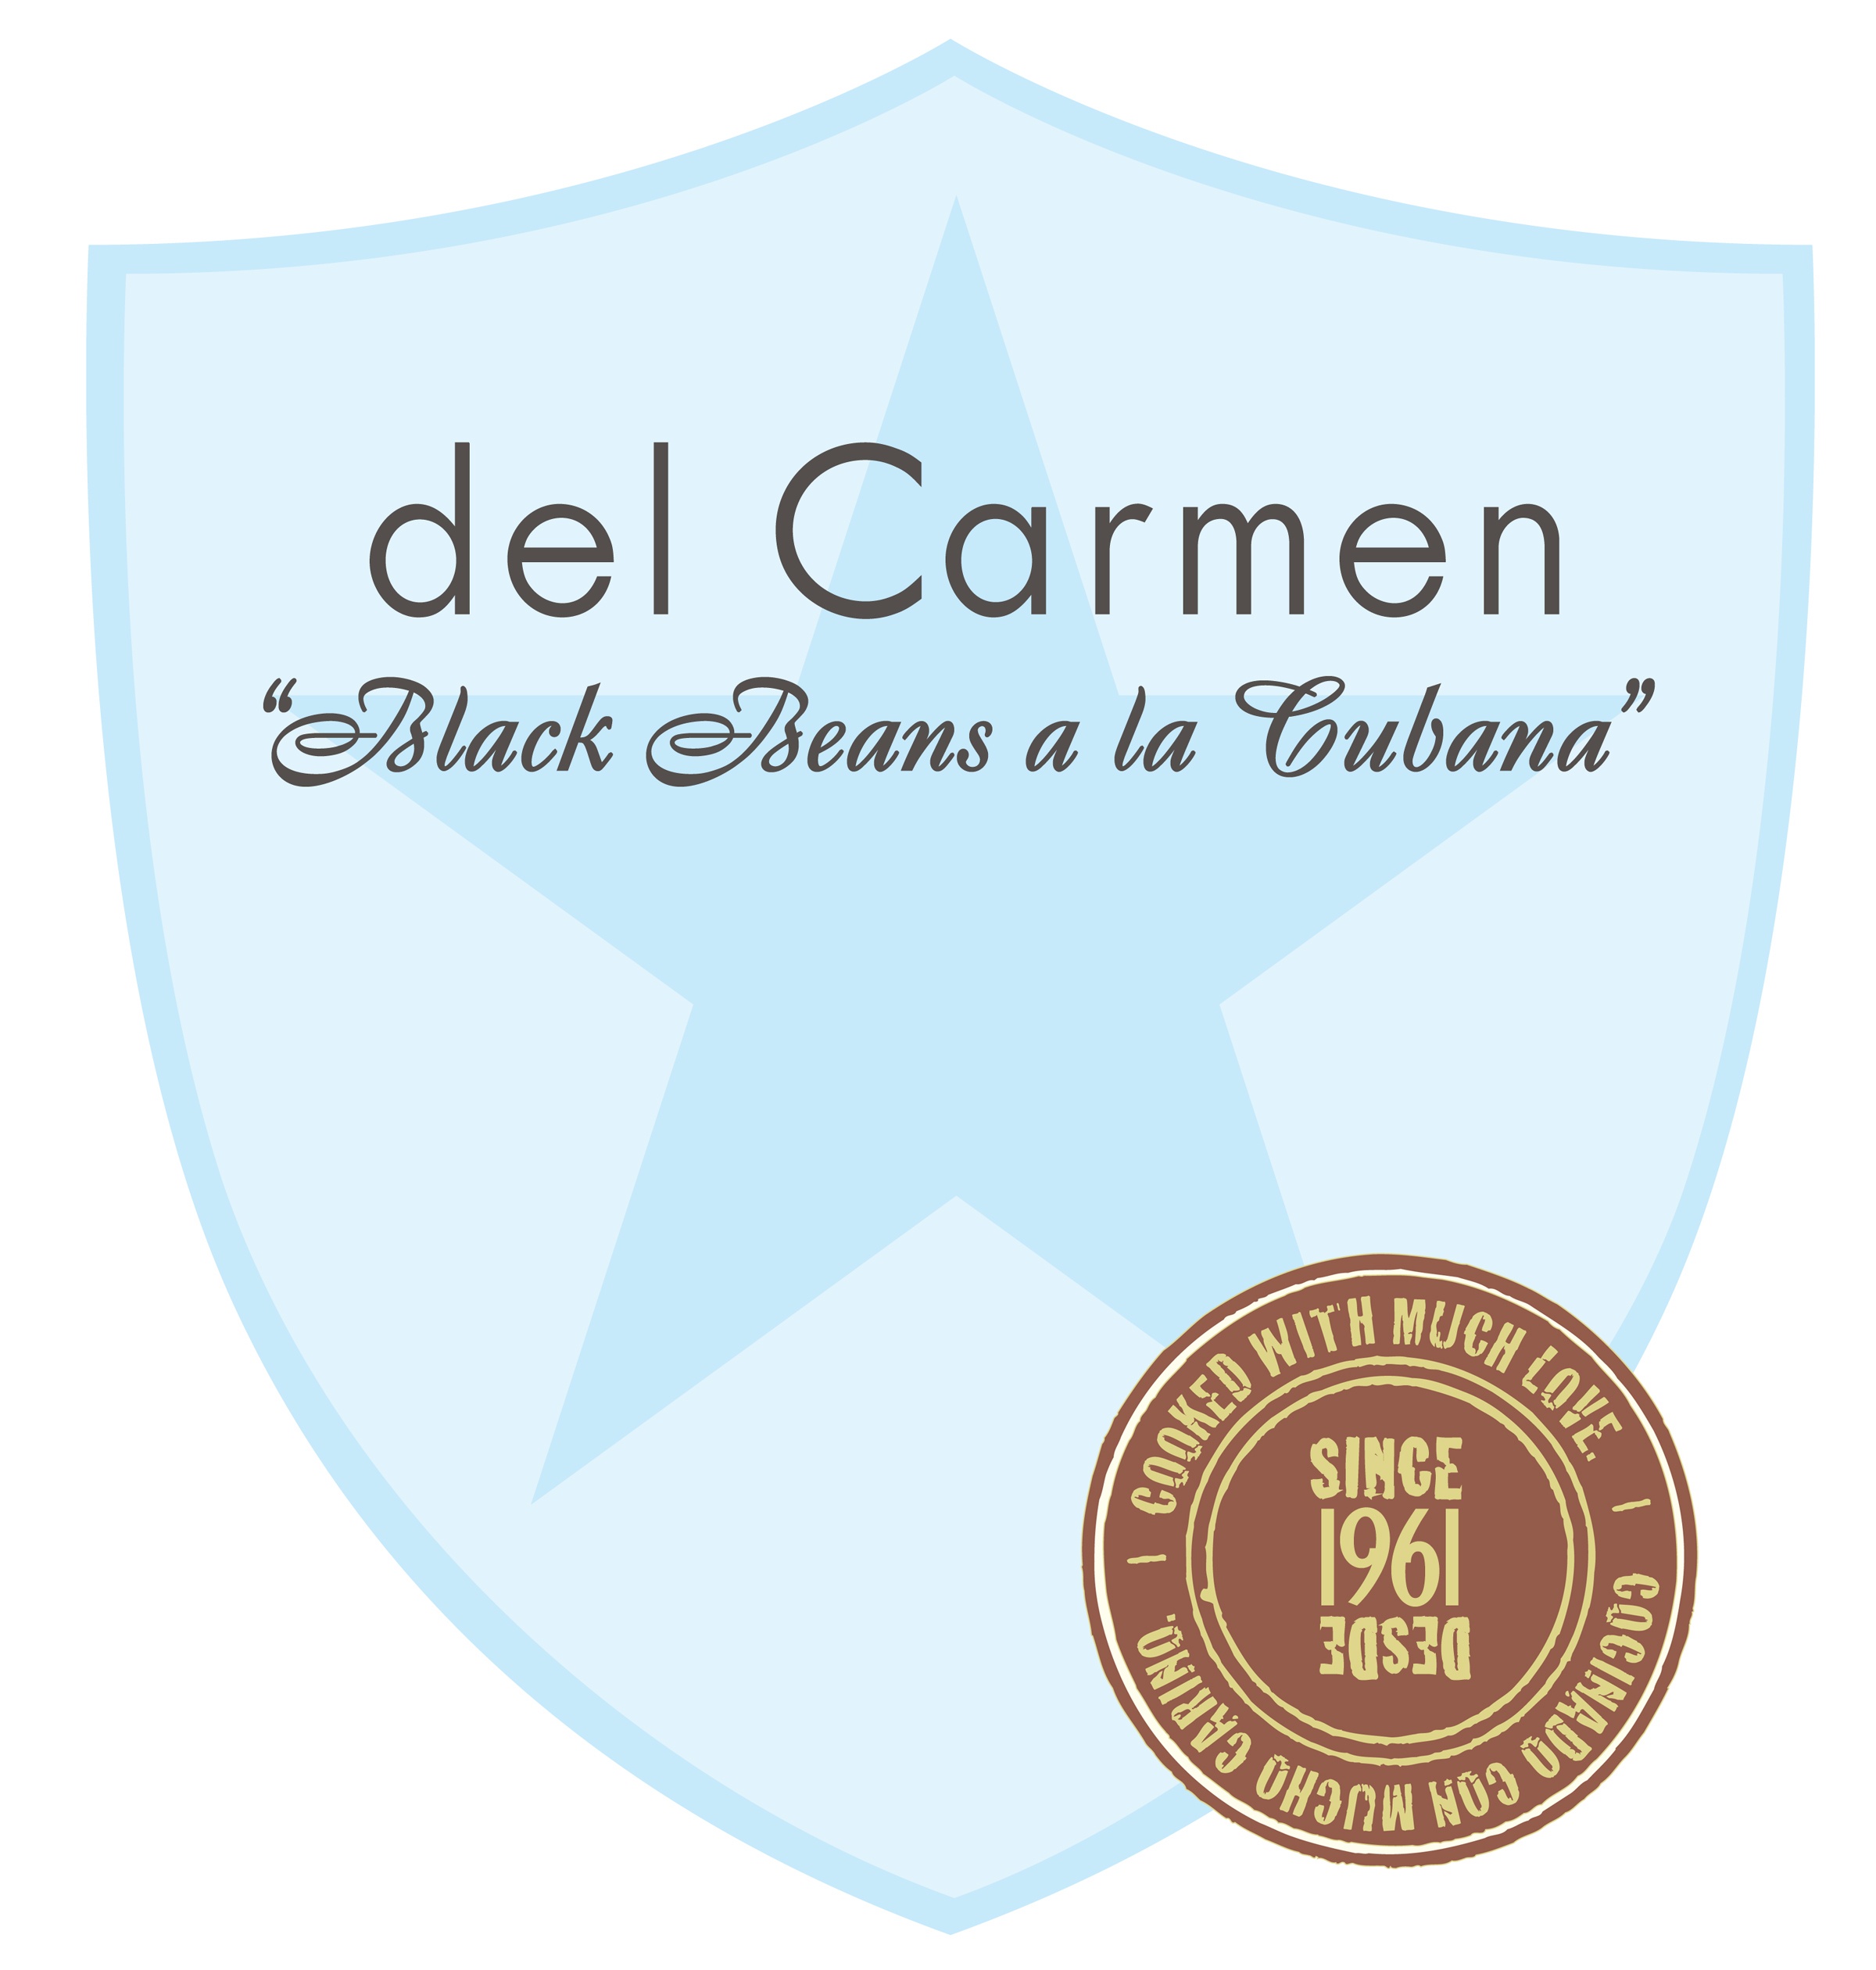 full_del carmen logo copy.jpg